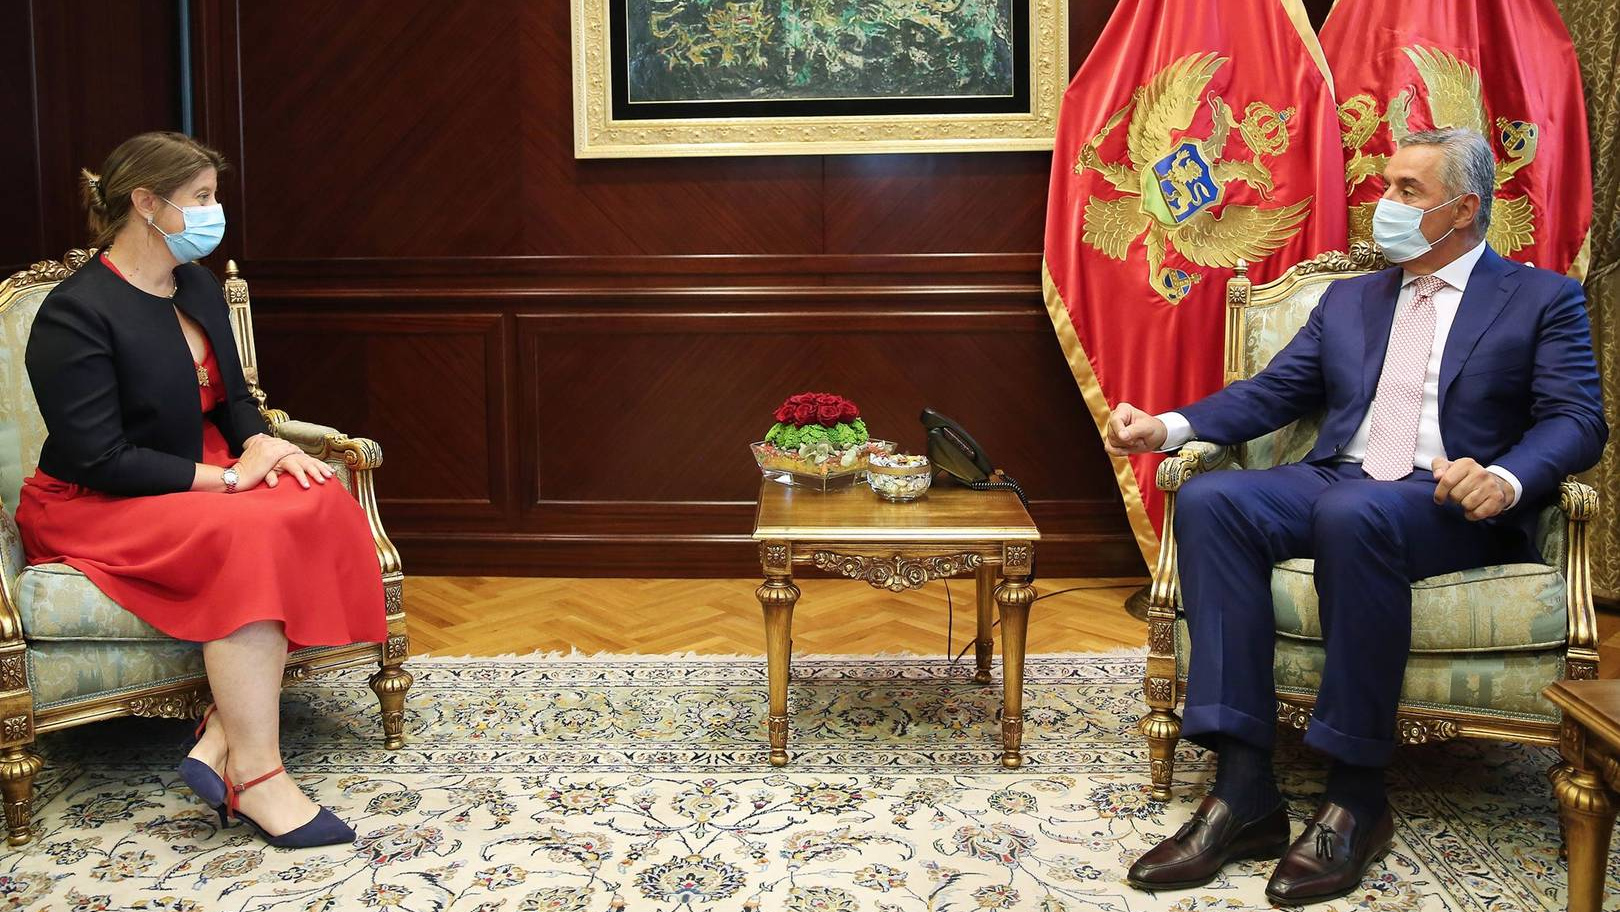 Встреча президента Черногории Мило Джукановича и посла Великобритании Элисона Кемпа